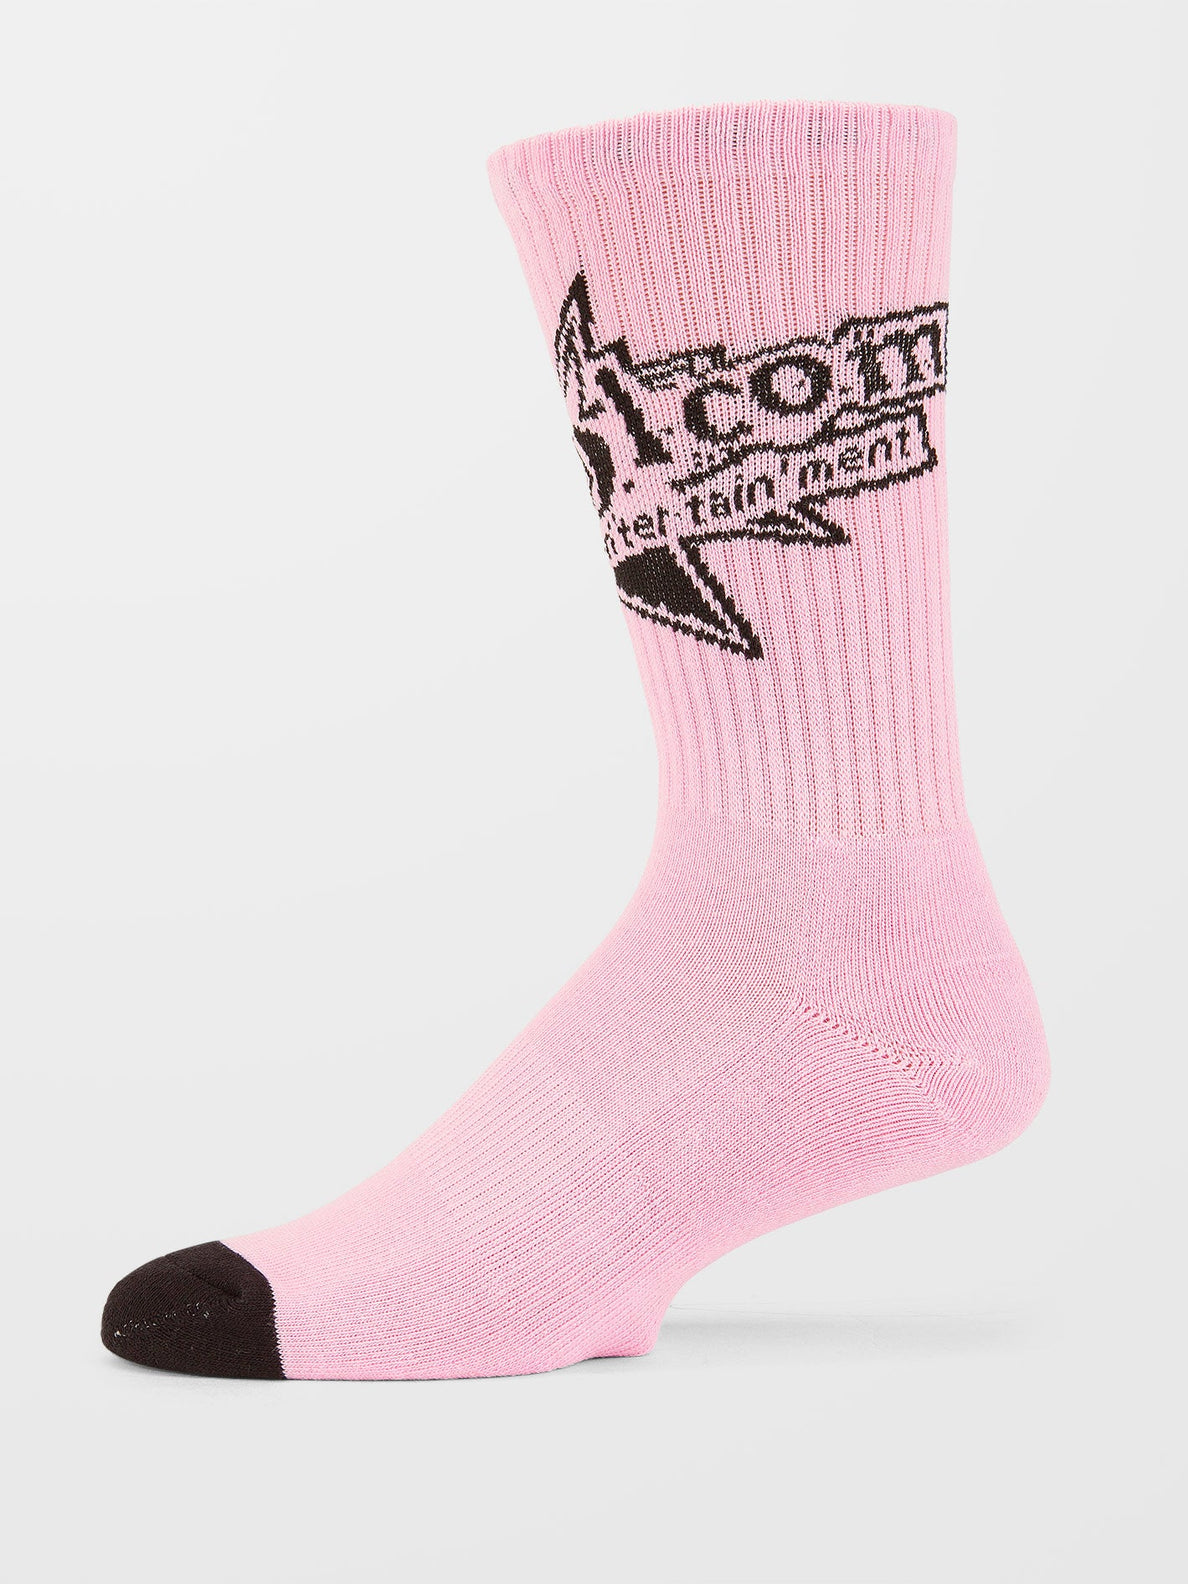 Calcetin Volcom V Ent Sock Premium Reef Pink | Calcetines | Volcom Shop | surfdevils.com